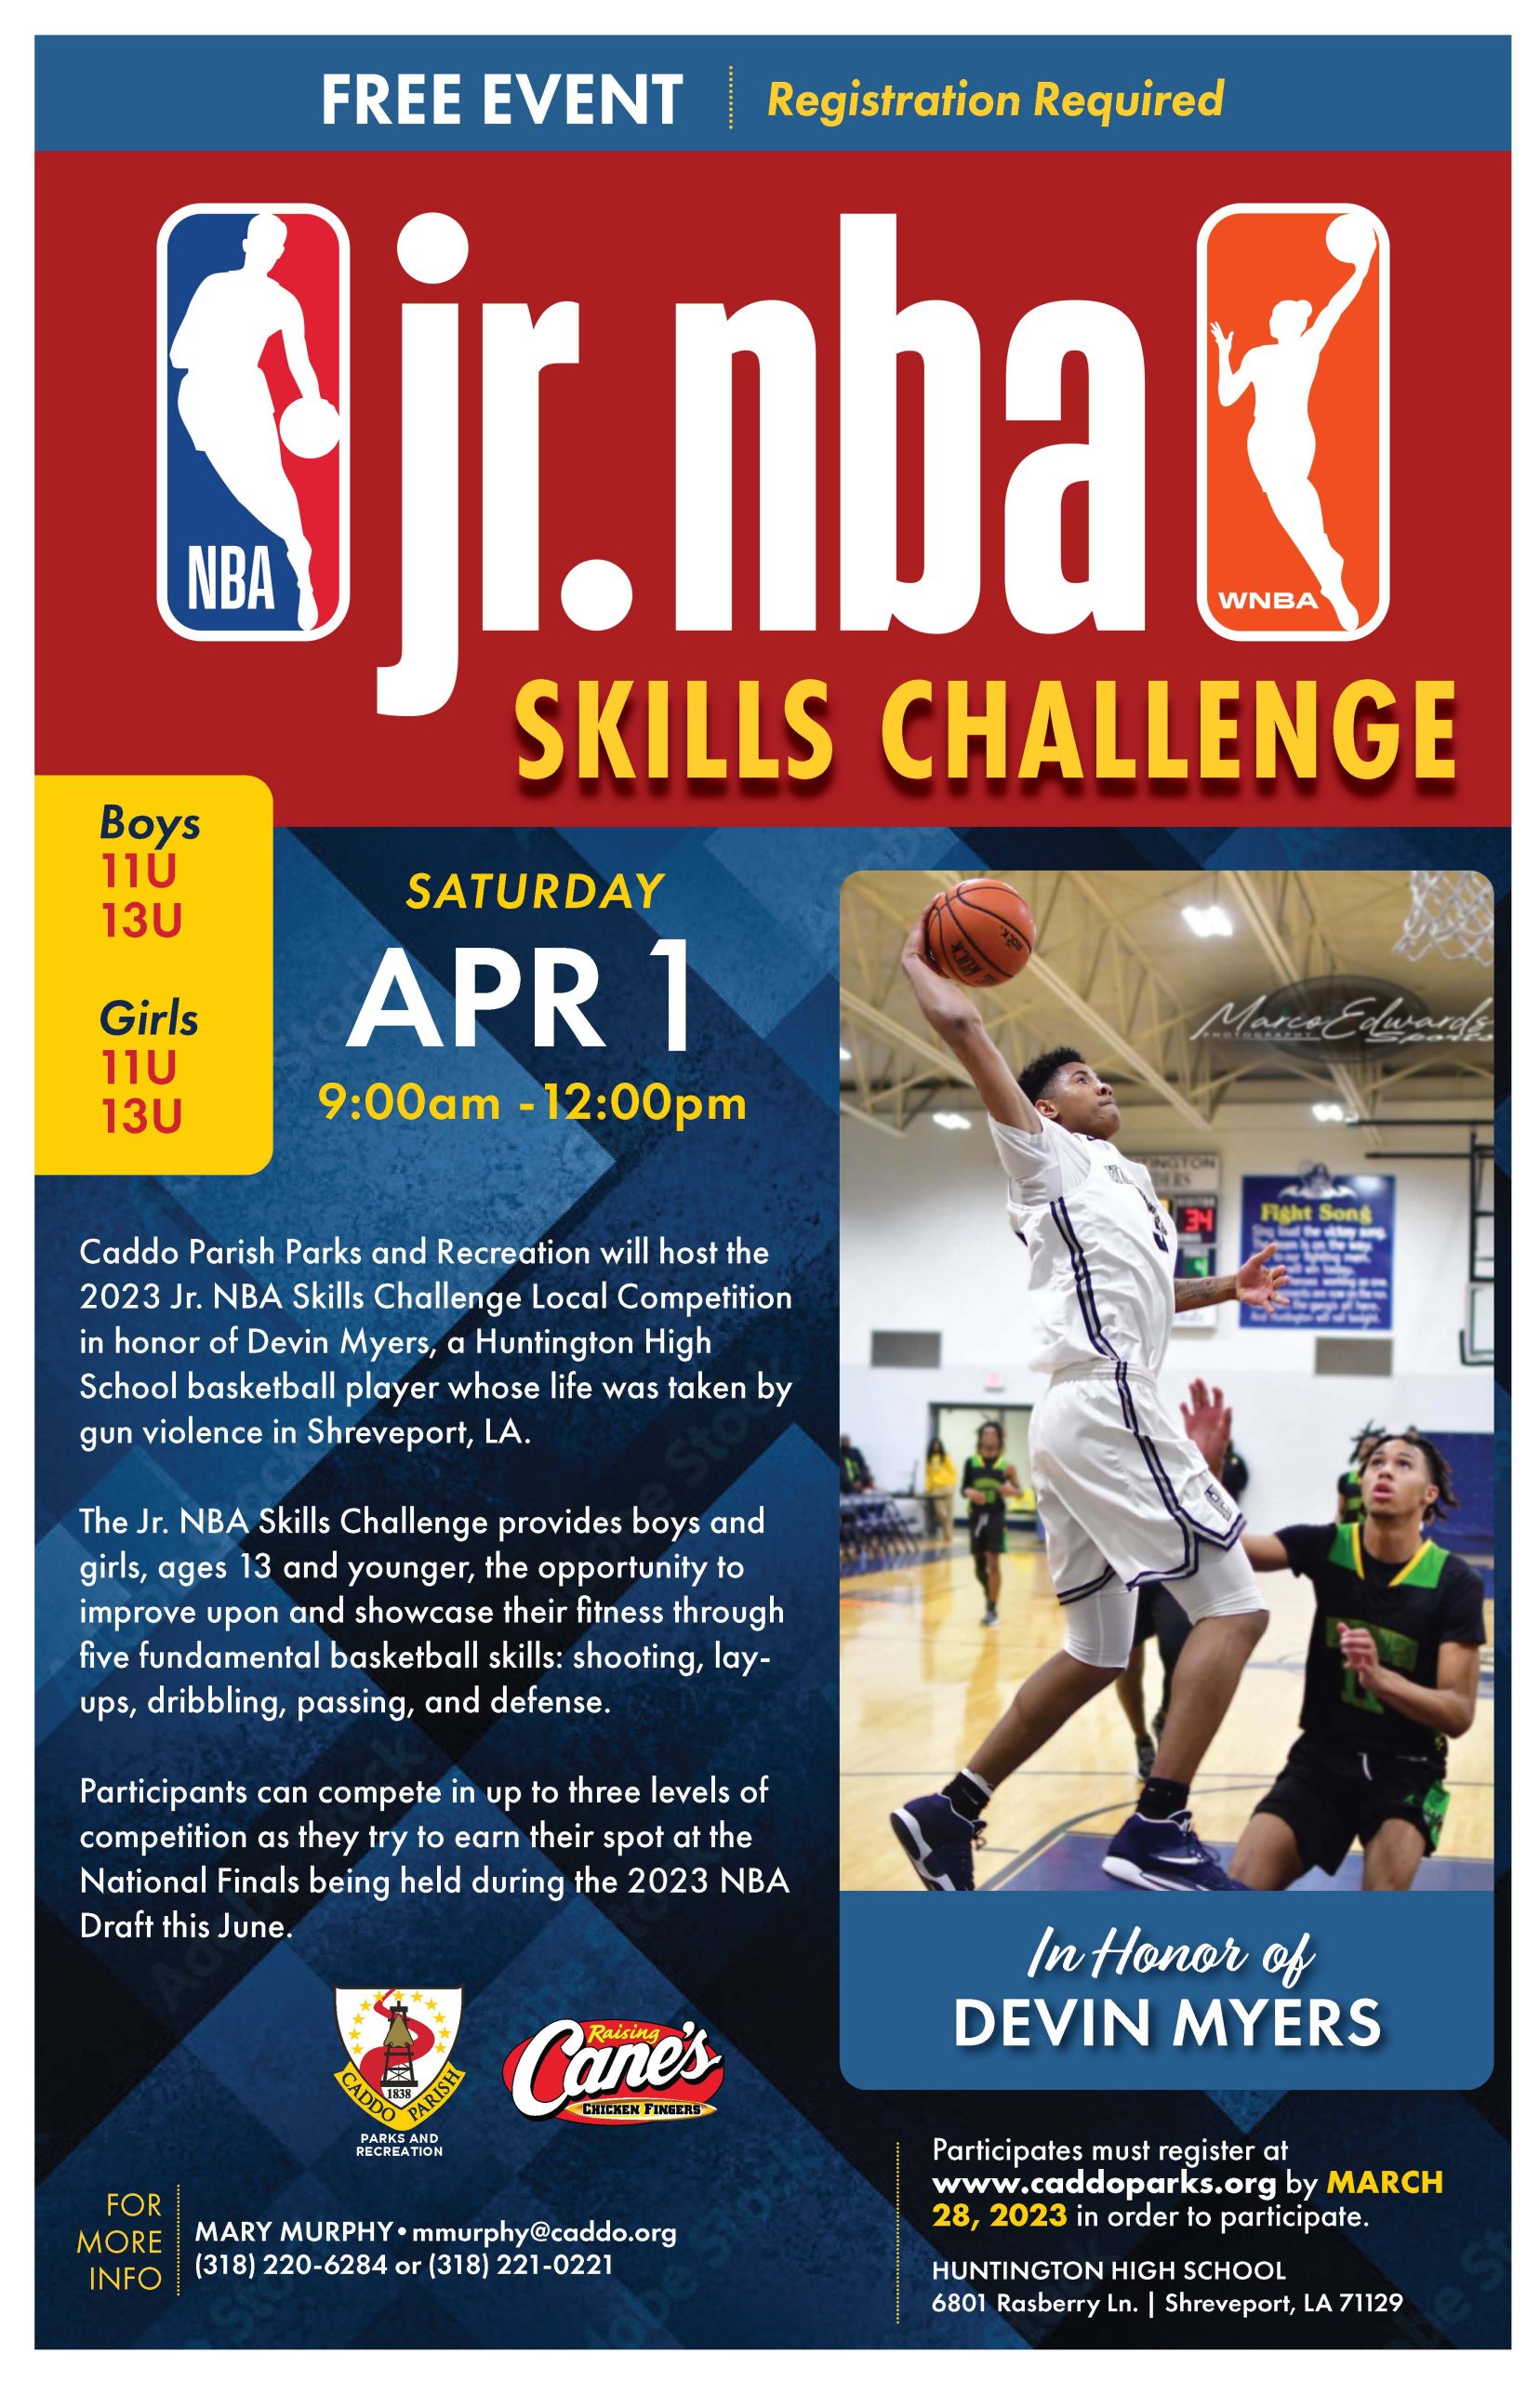 Caddo Parish Parks & Recreation to Host 2nd Annual Jr. NBA Skills